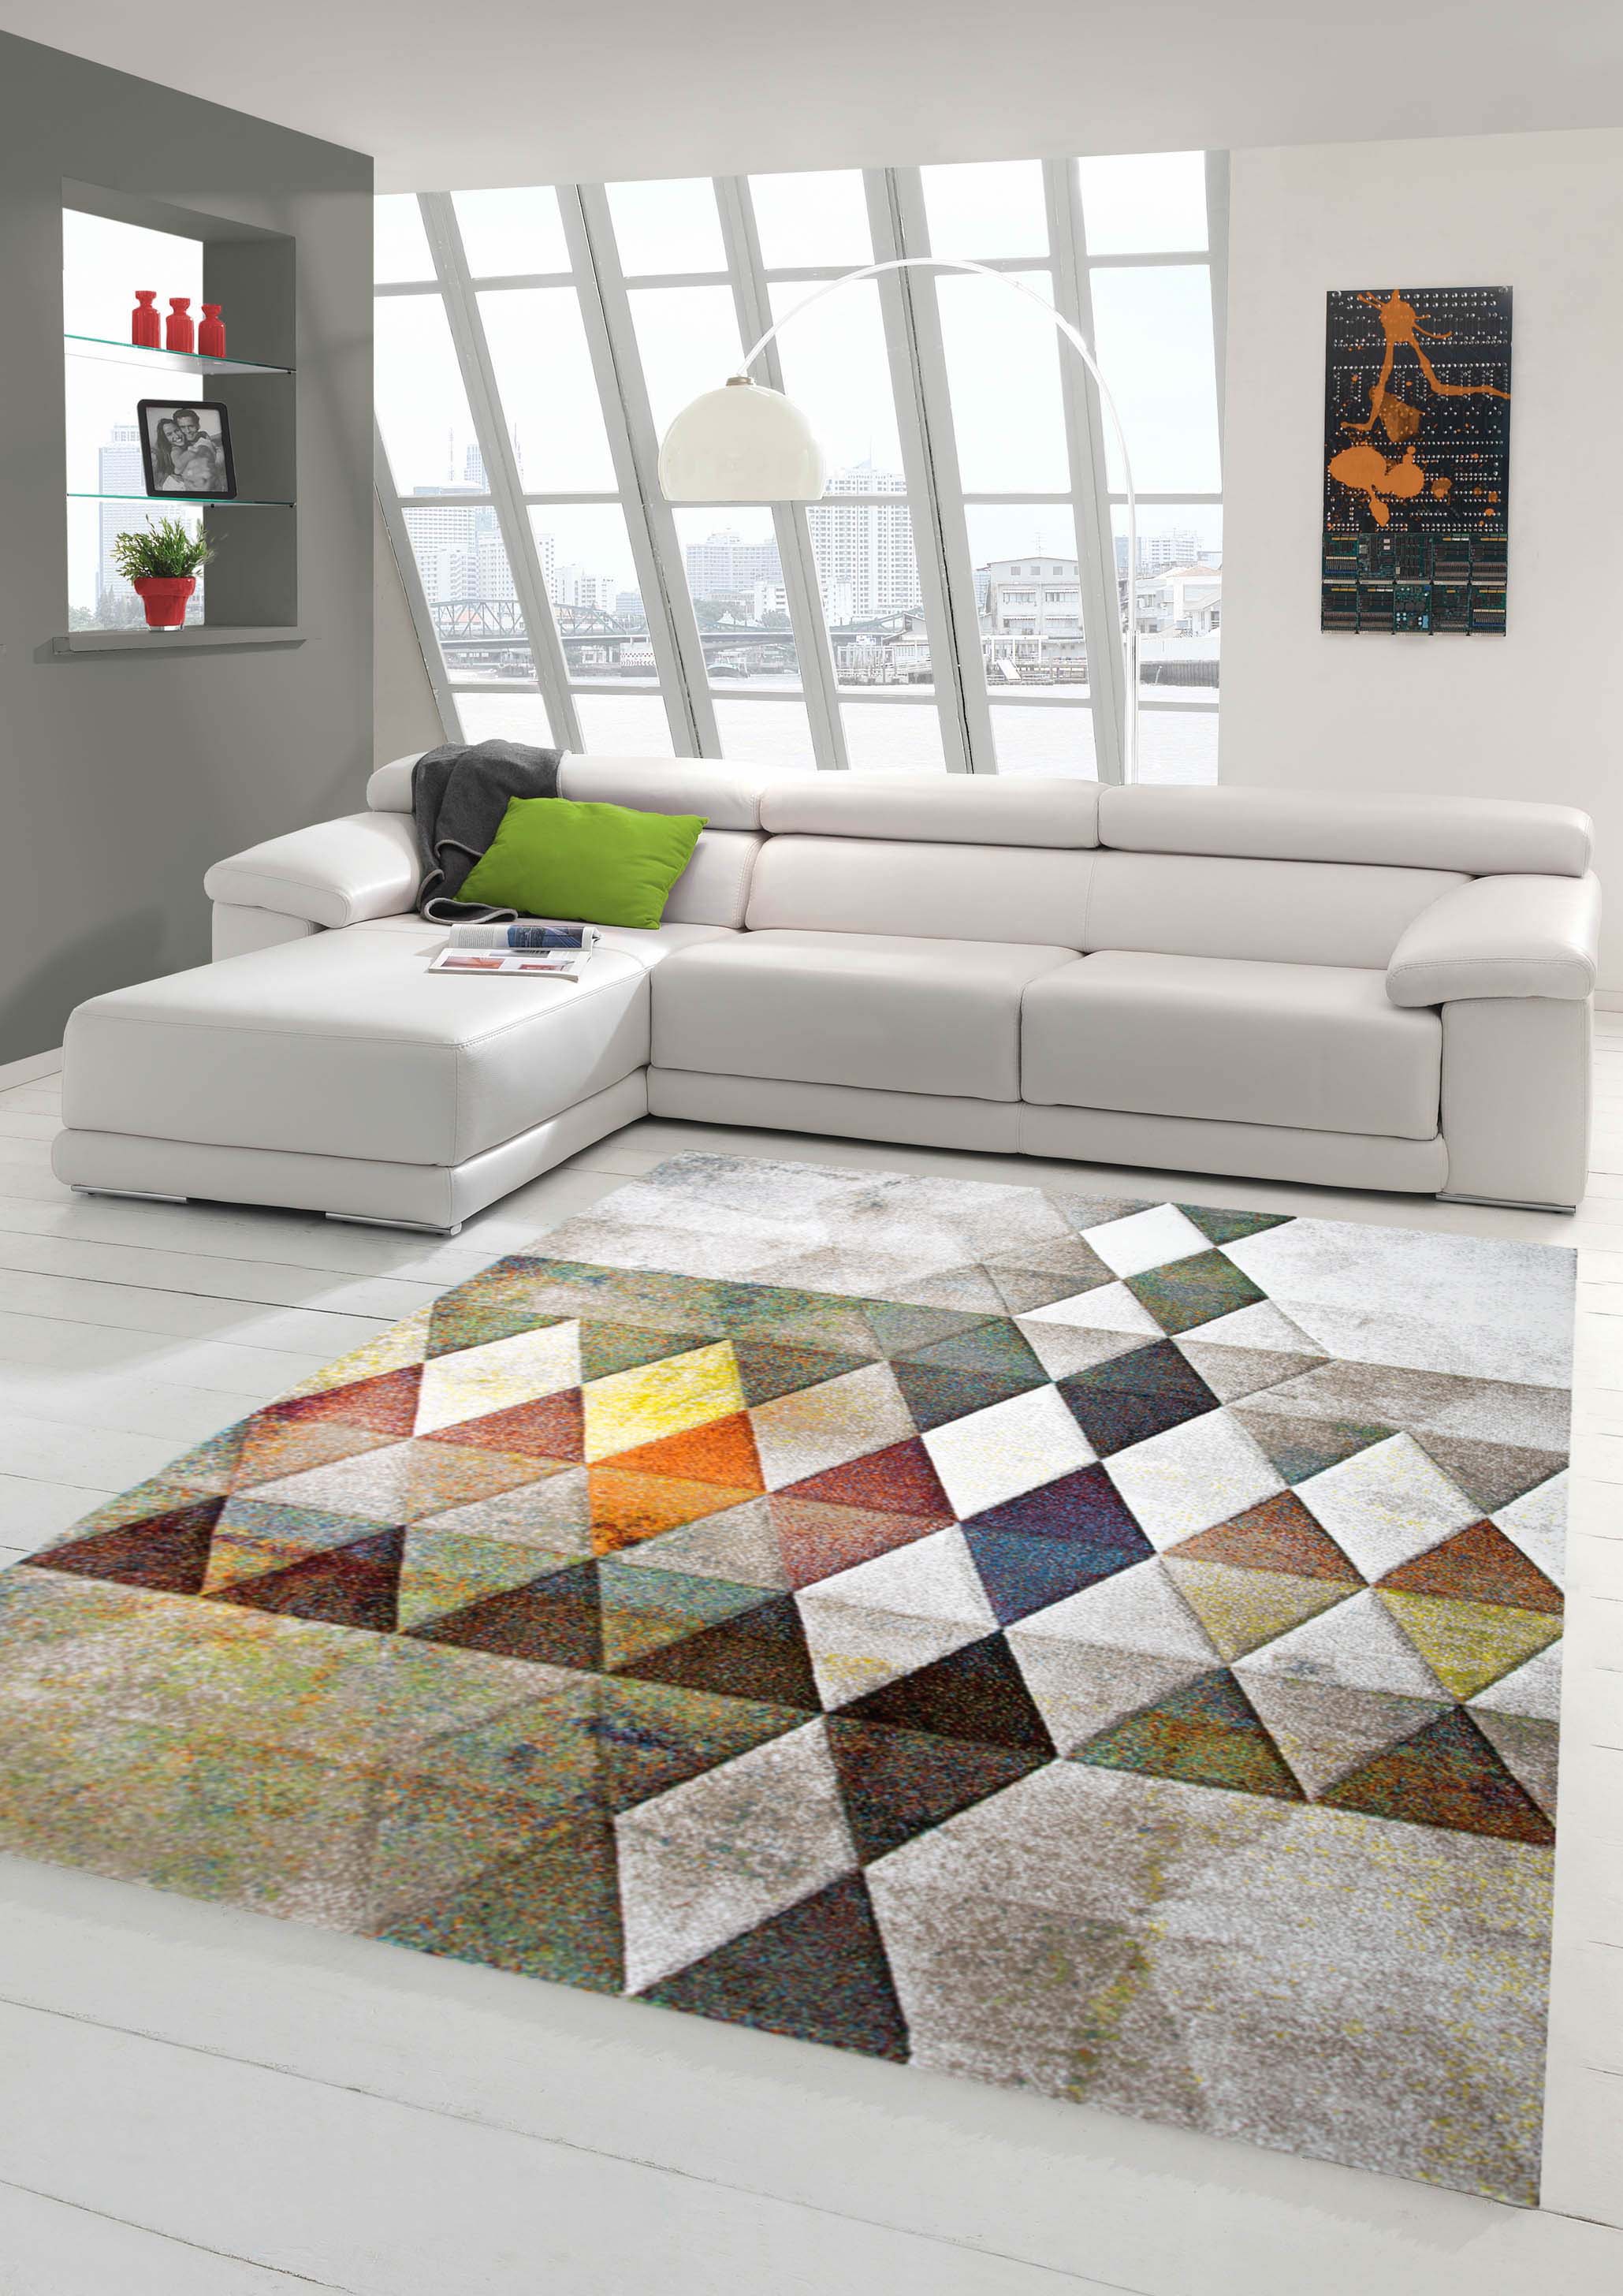 Modern & designer Teppich -Traum carpet at cheap and carpets: dreams - High-quality